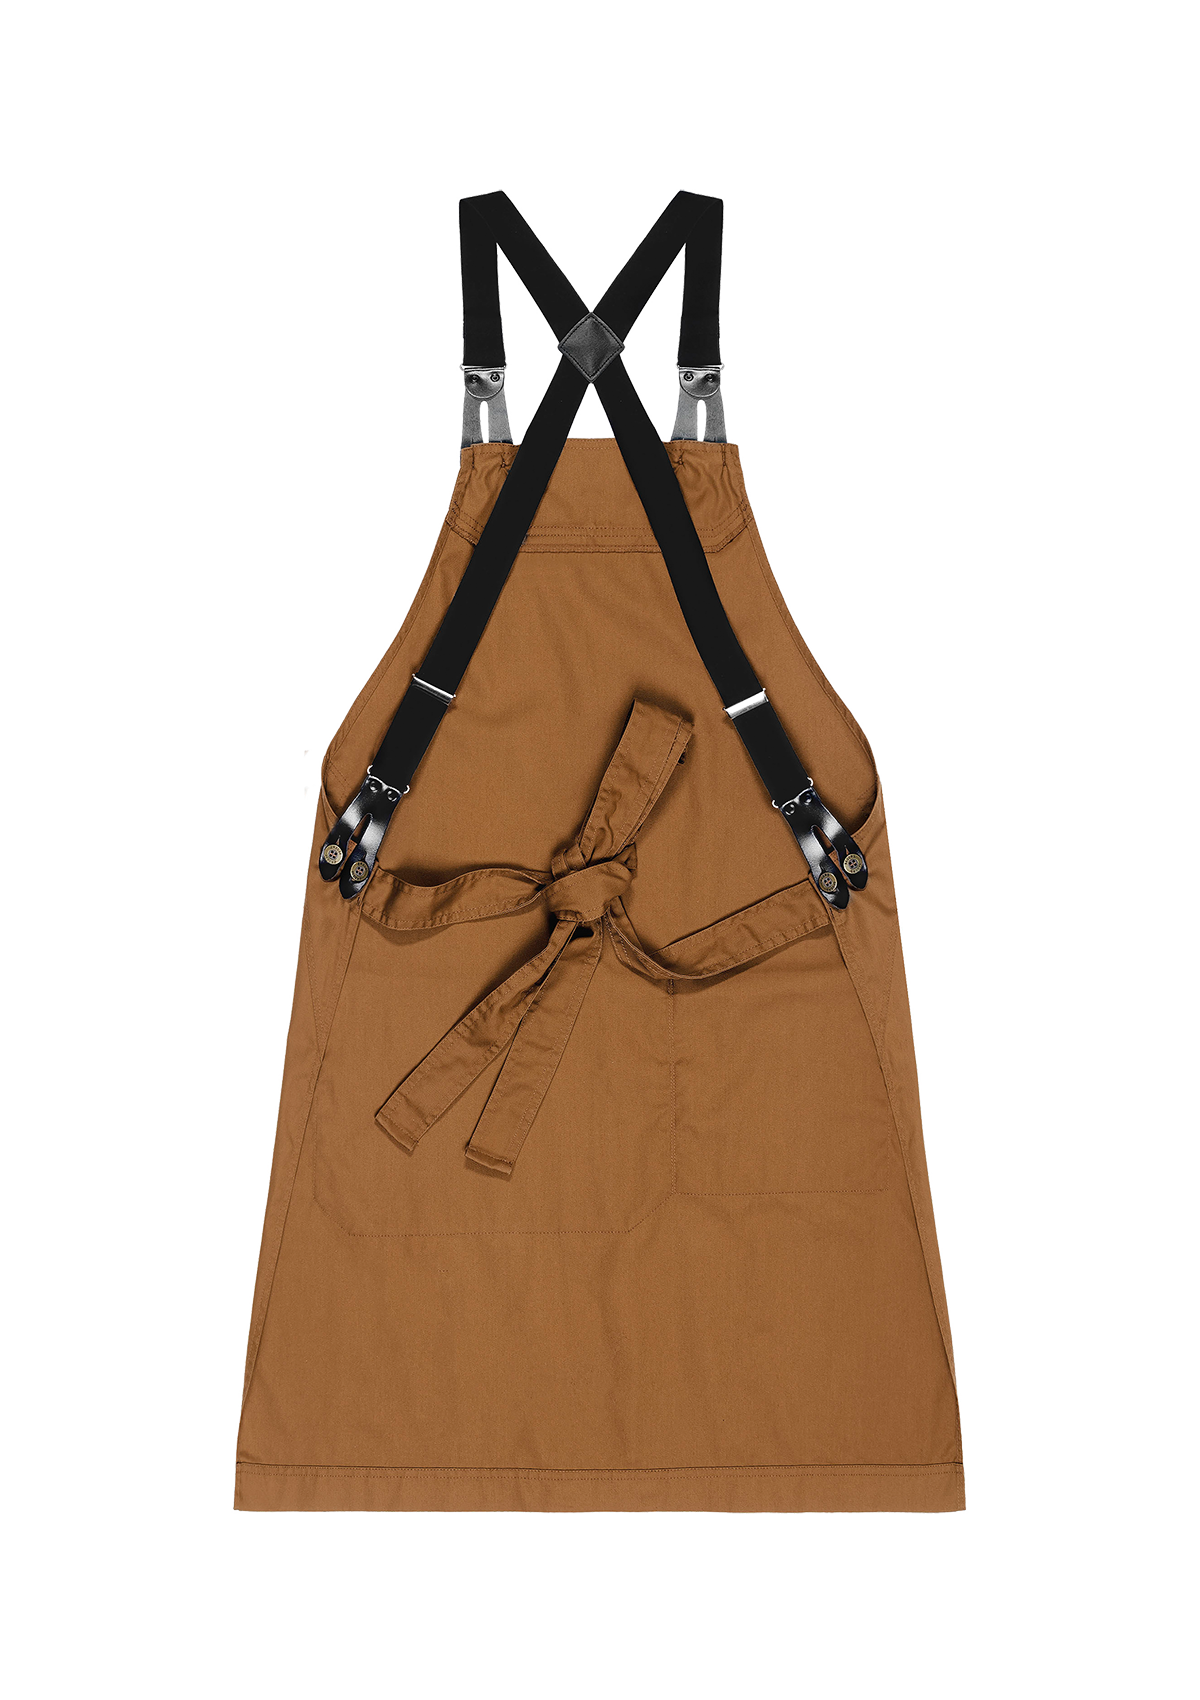 Unisex Bib Apron with suspenders. Segers | Cookniche